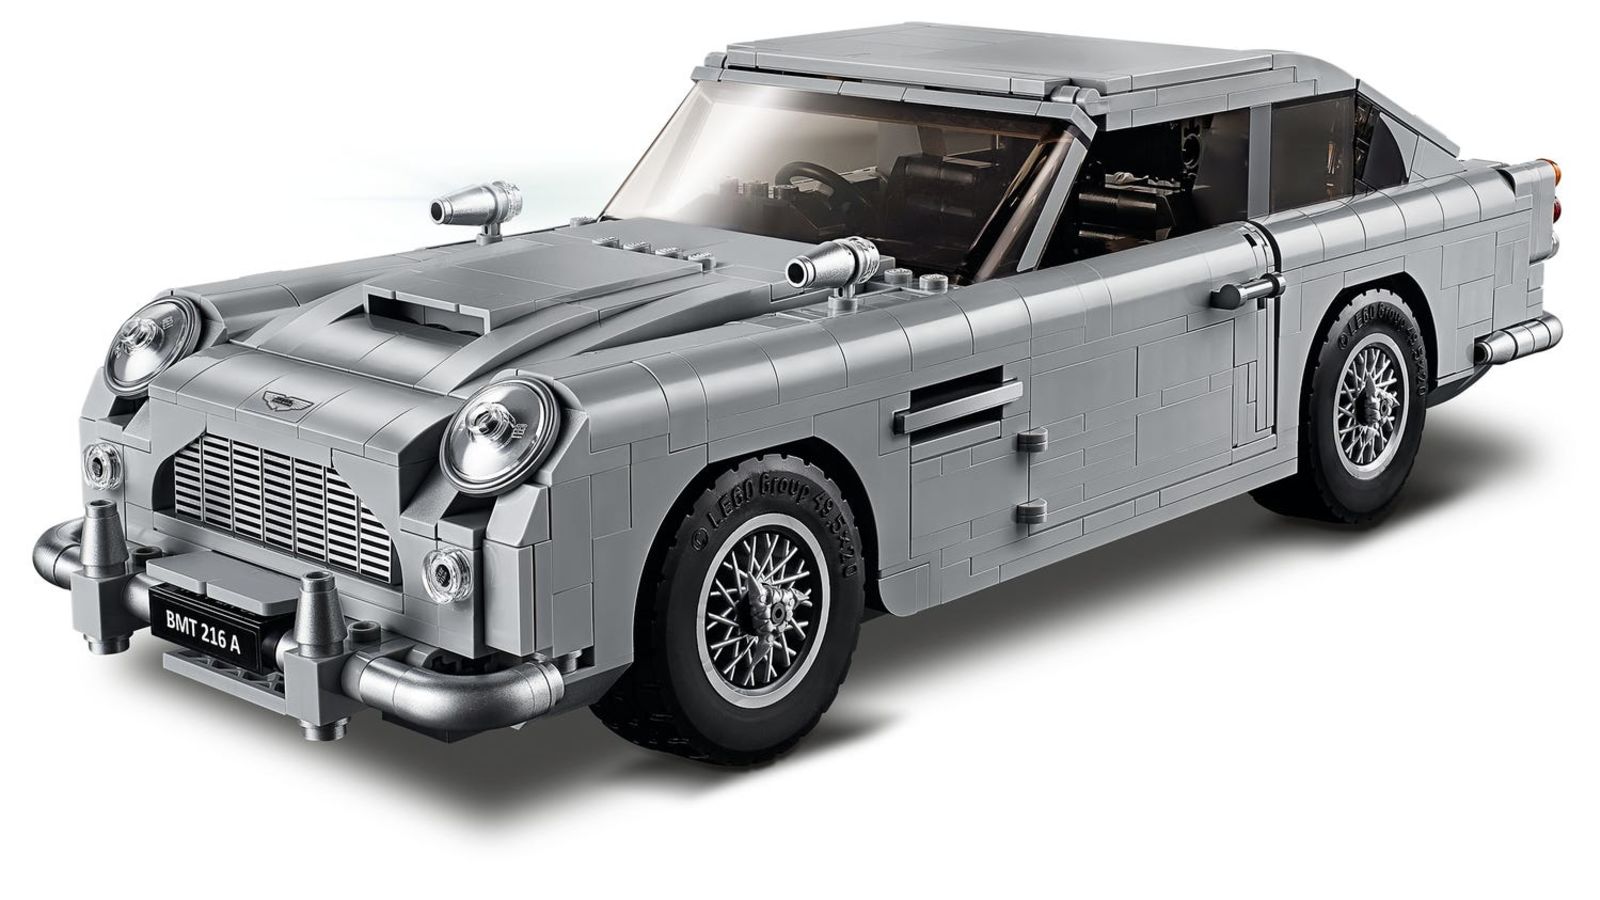 Illustration for article titled Behold, The Lego James Bond™ Aston Martin DB5